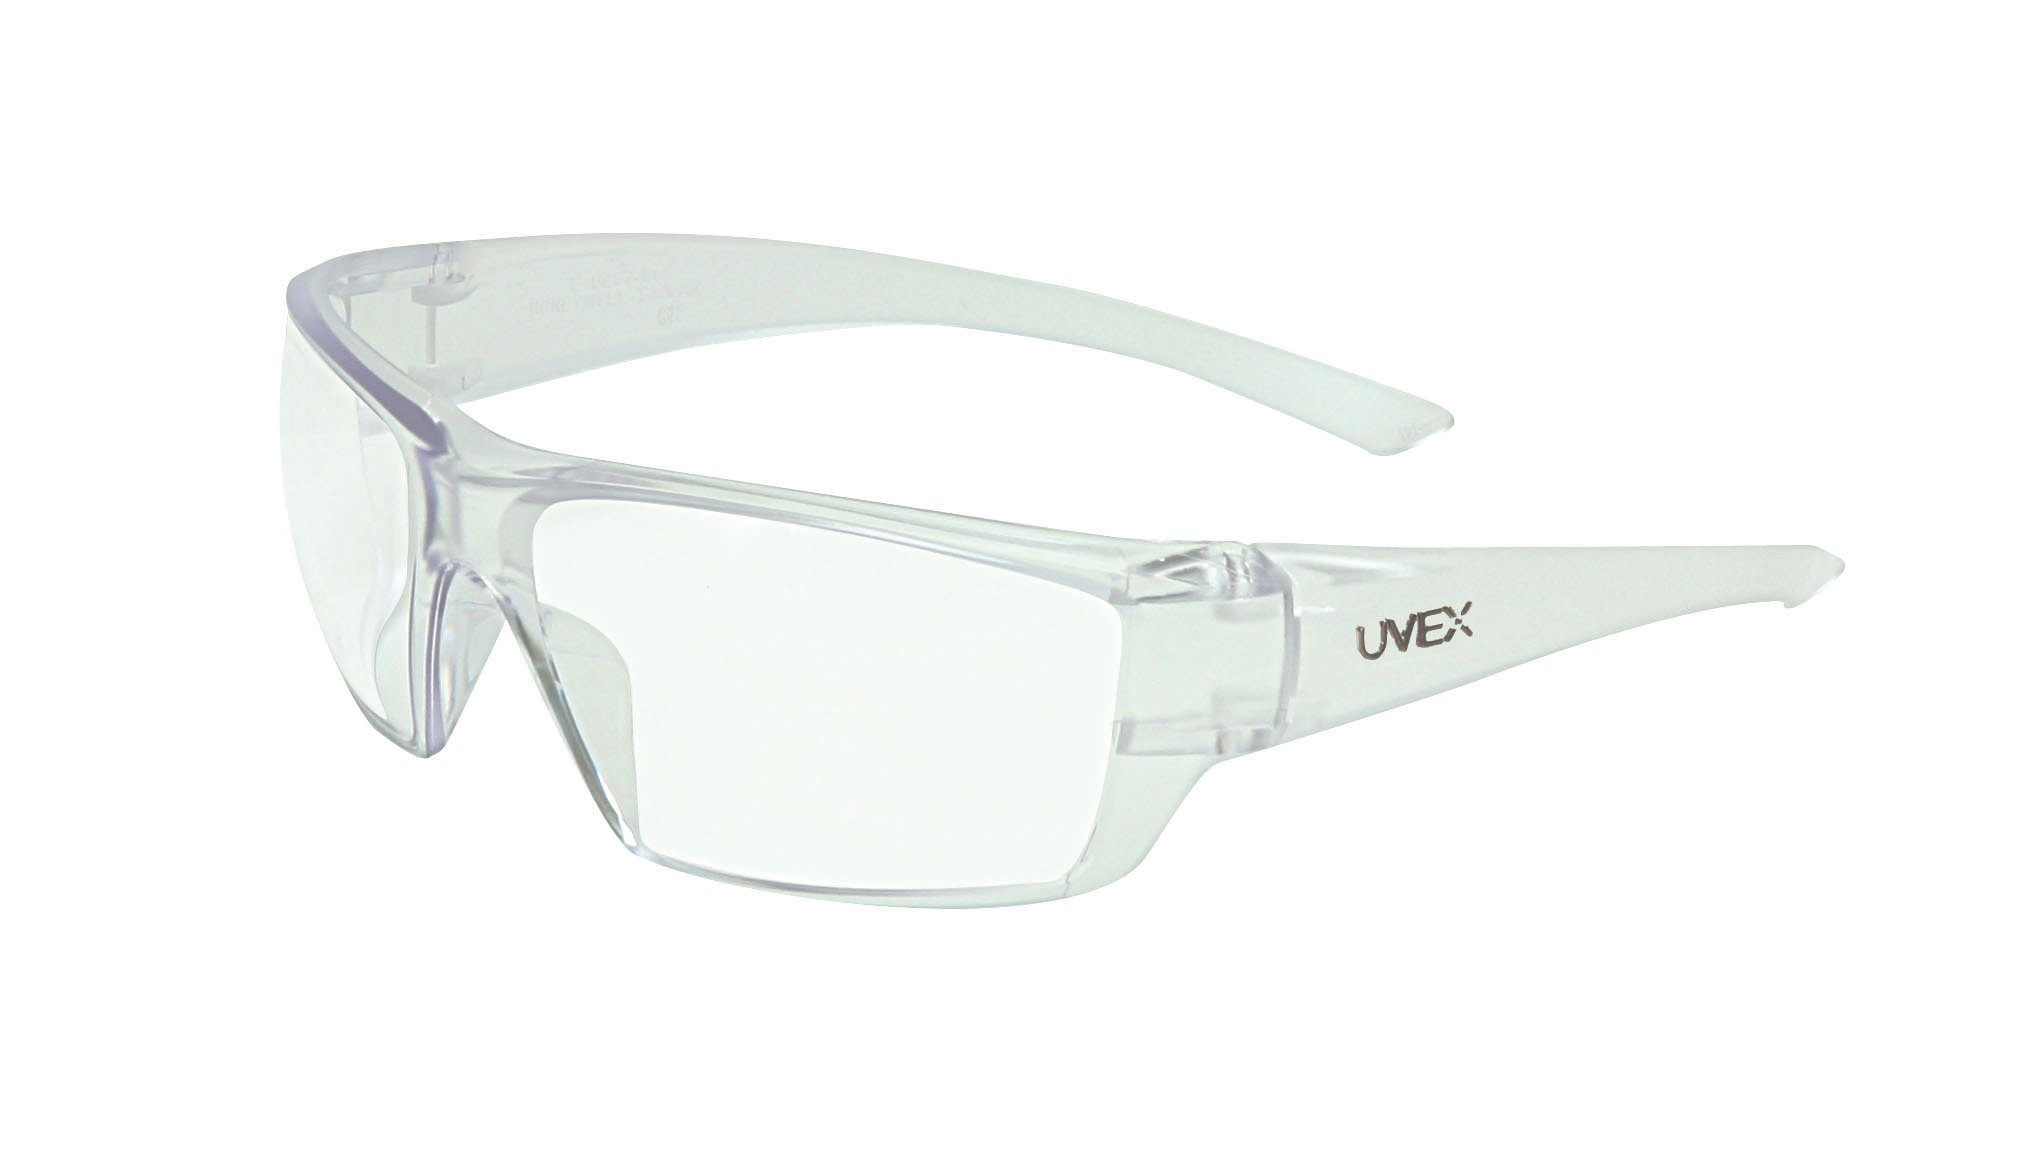 Honeywell Clear Lens Safety Glasses XV400